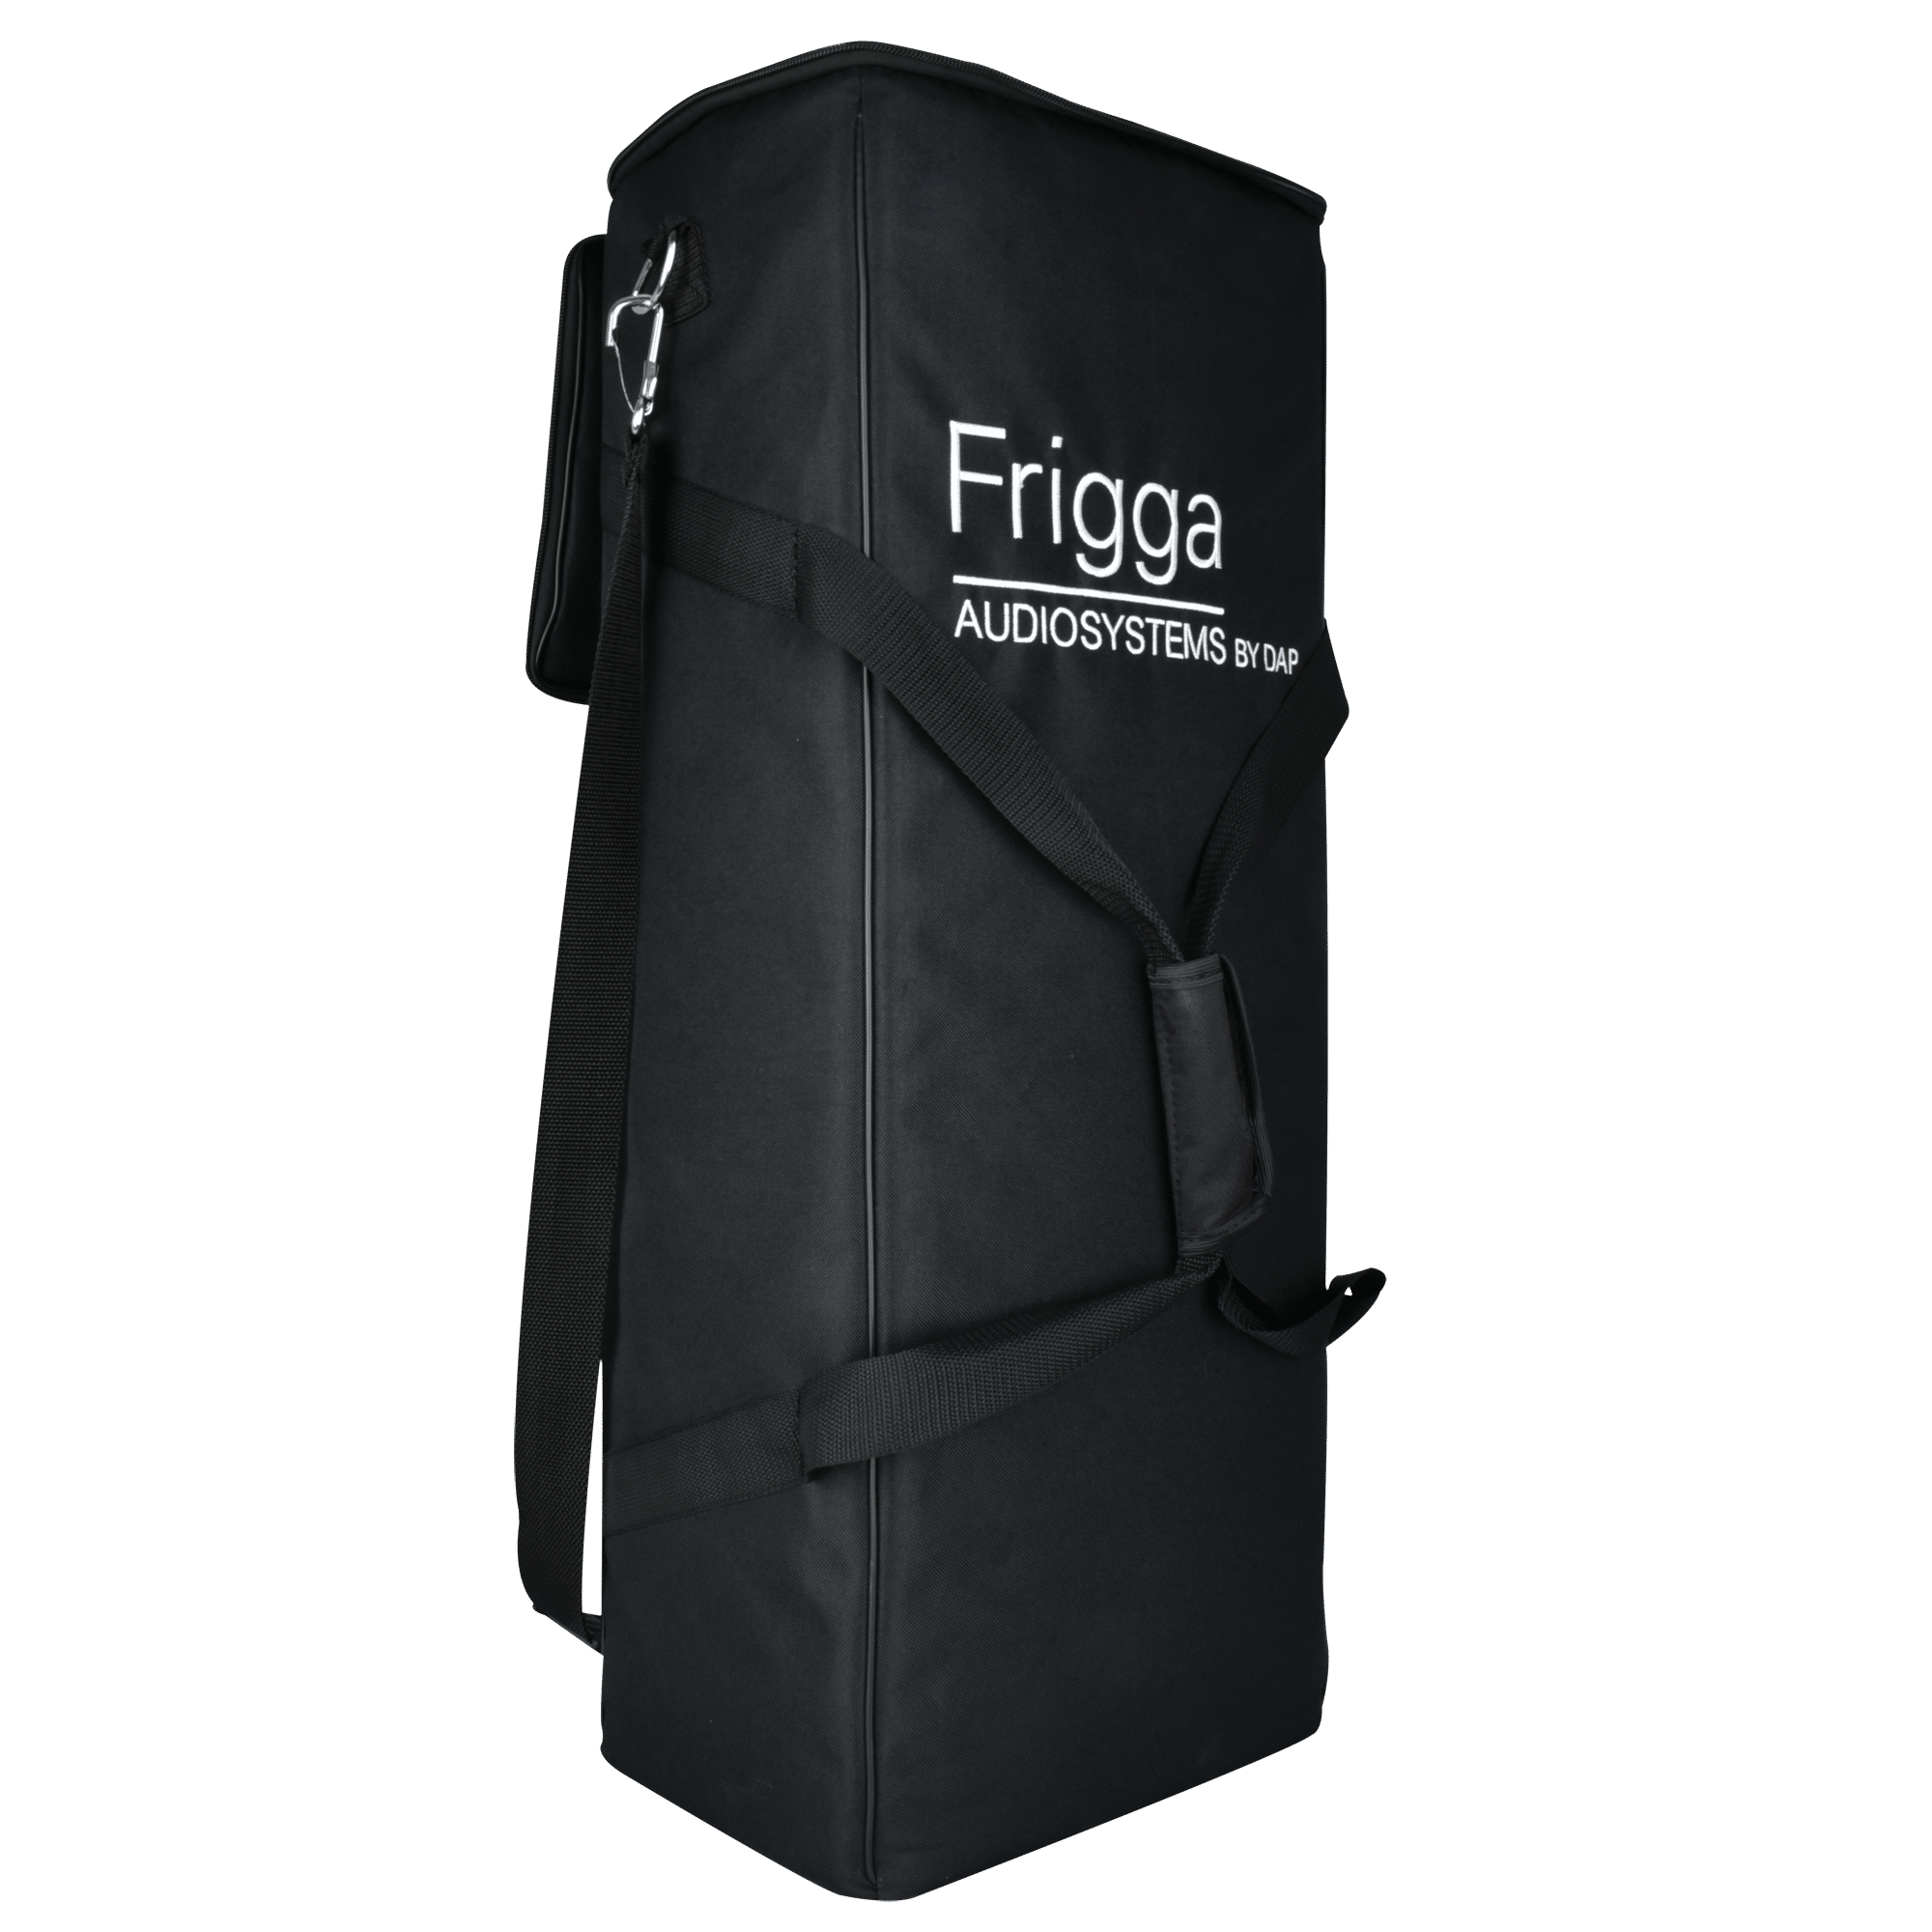 Carrying Bag for Frigga Top - Onlinediscowinkel.nl